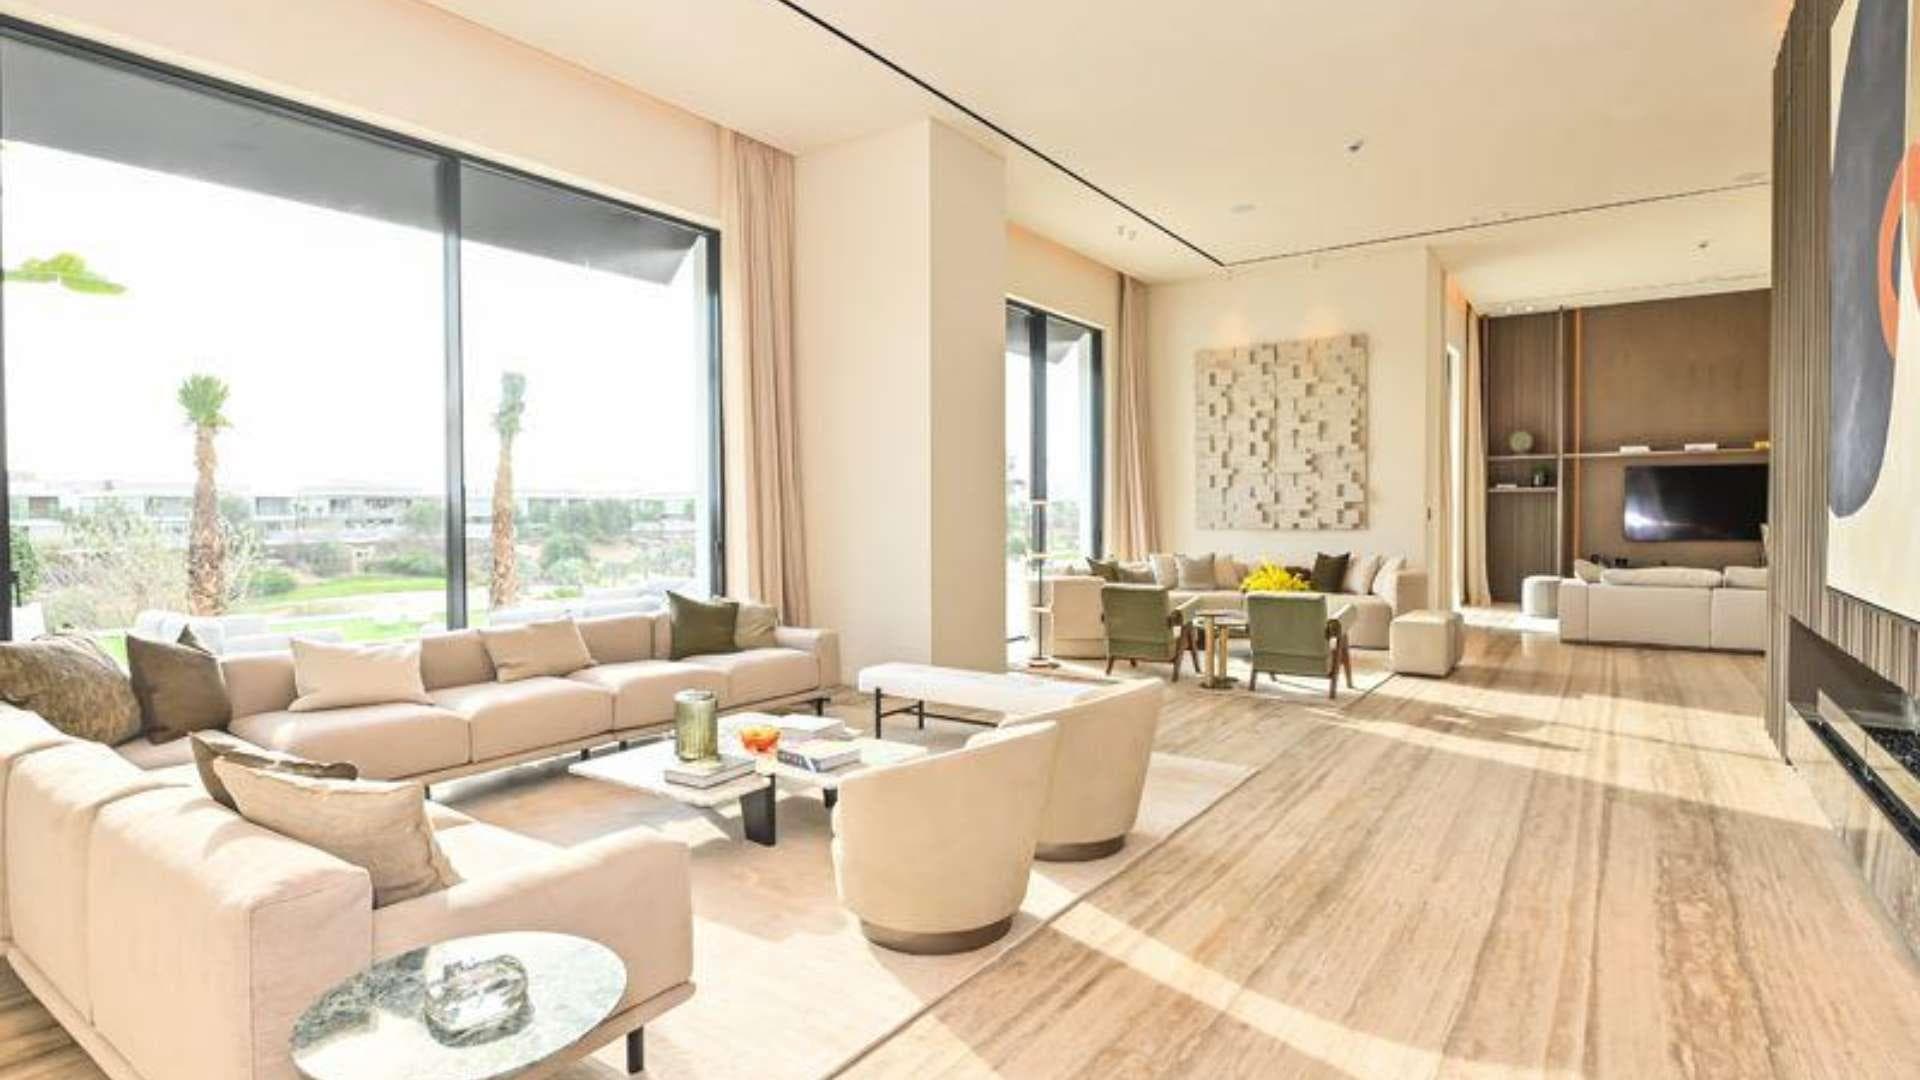 7 Bedroom Villa For Sale Dubai Hills Lp20693 1302ed1fc46adc00.jpg